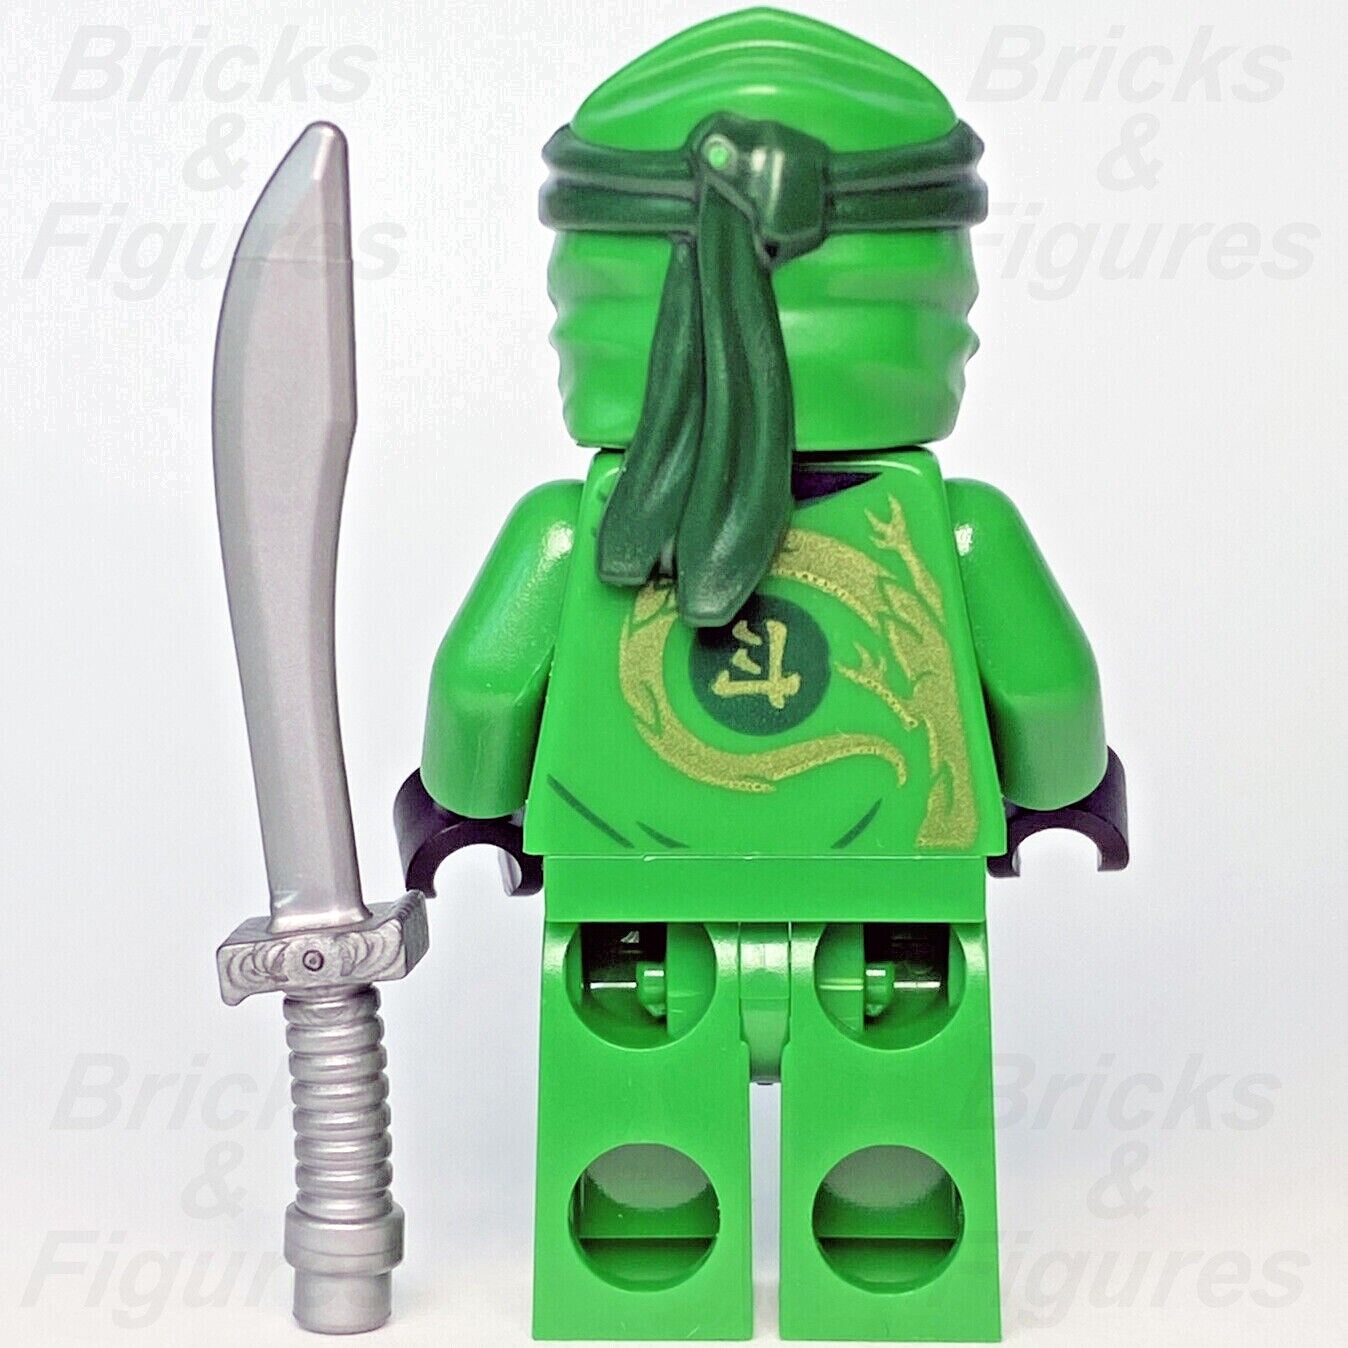 Ninjago LEGO Lloyd Legacy Possession Green Ninja Minifigure 112111 njo708 New - Bricks & Figures